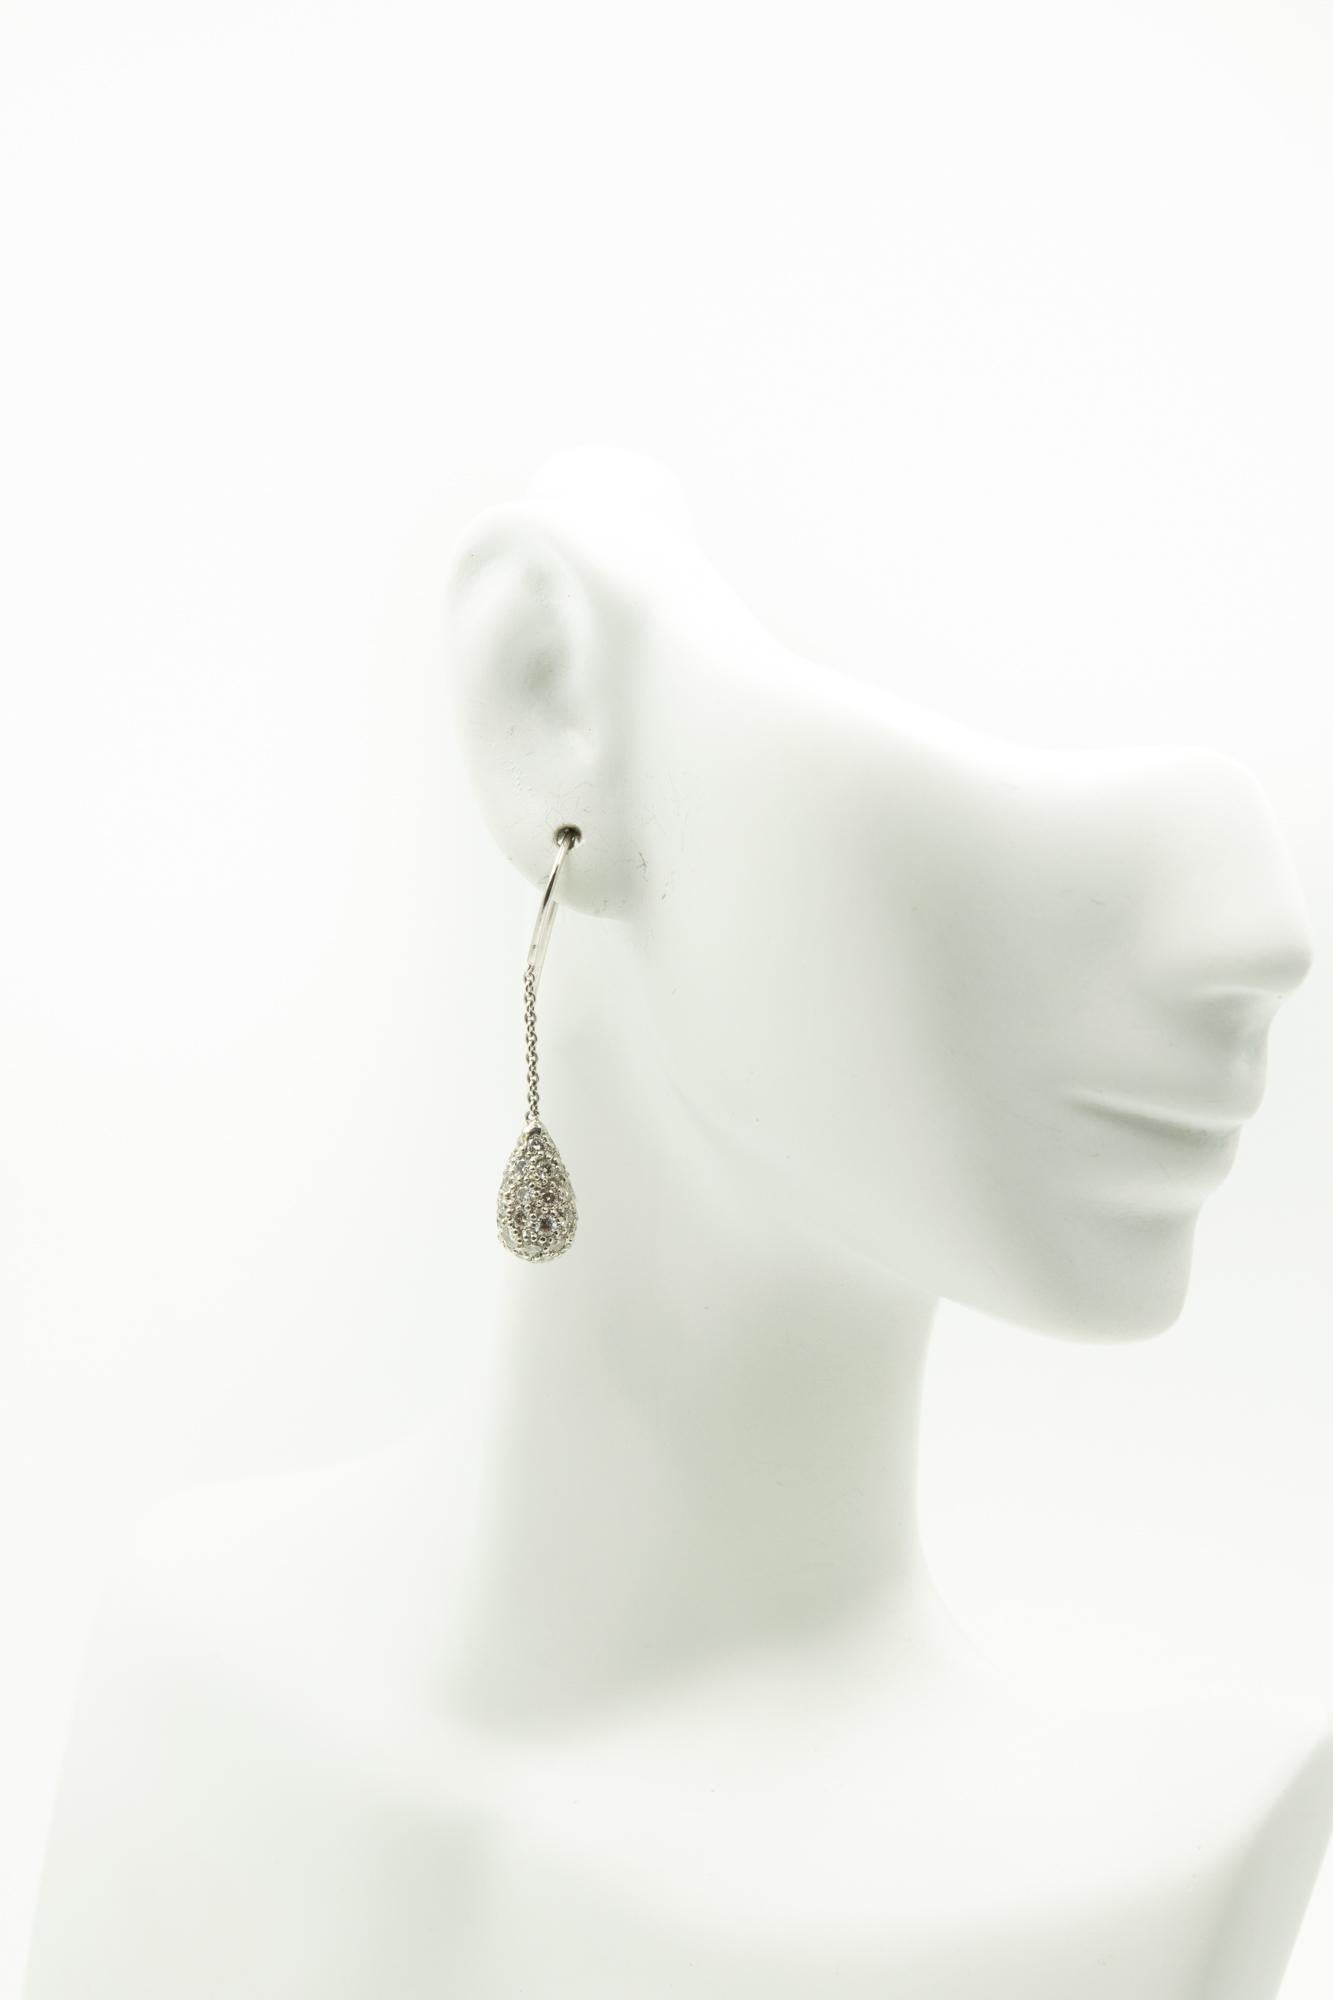 Pavé diamond teardrop earrings dangling on 18K white gold wire and chain. Hook backs for pierced ears. Diamond teardrops total an estimated 2.7 carats; clarity of the diamonds is SI.
